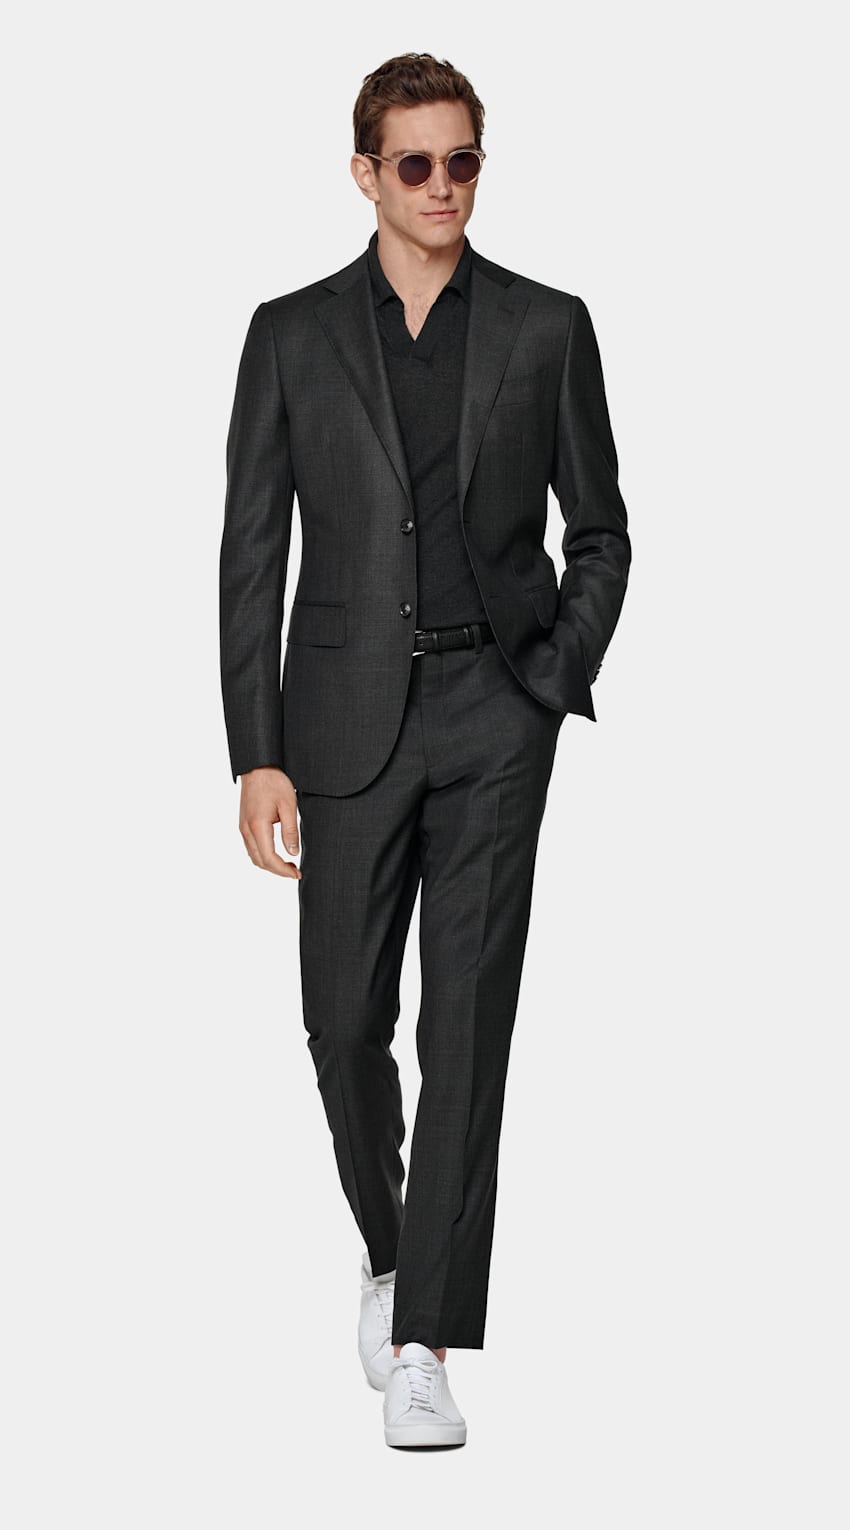 SUITSUPPLY Pure Wool S110's by Vitale Barberis Canonico, Italy Dark Grey Lazio Suit